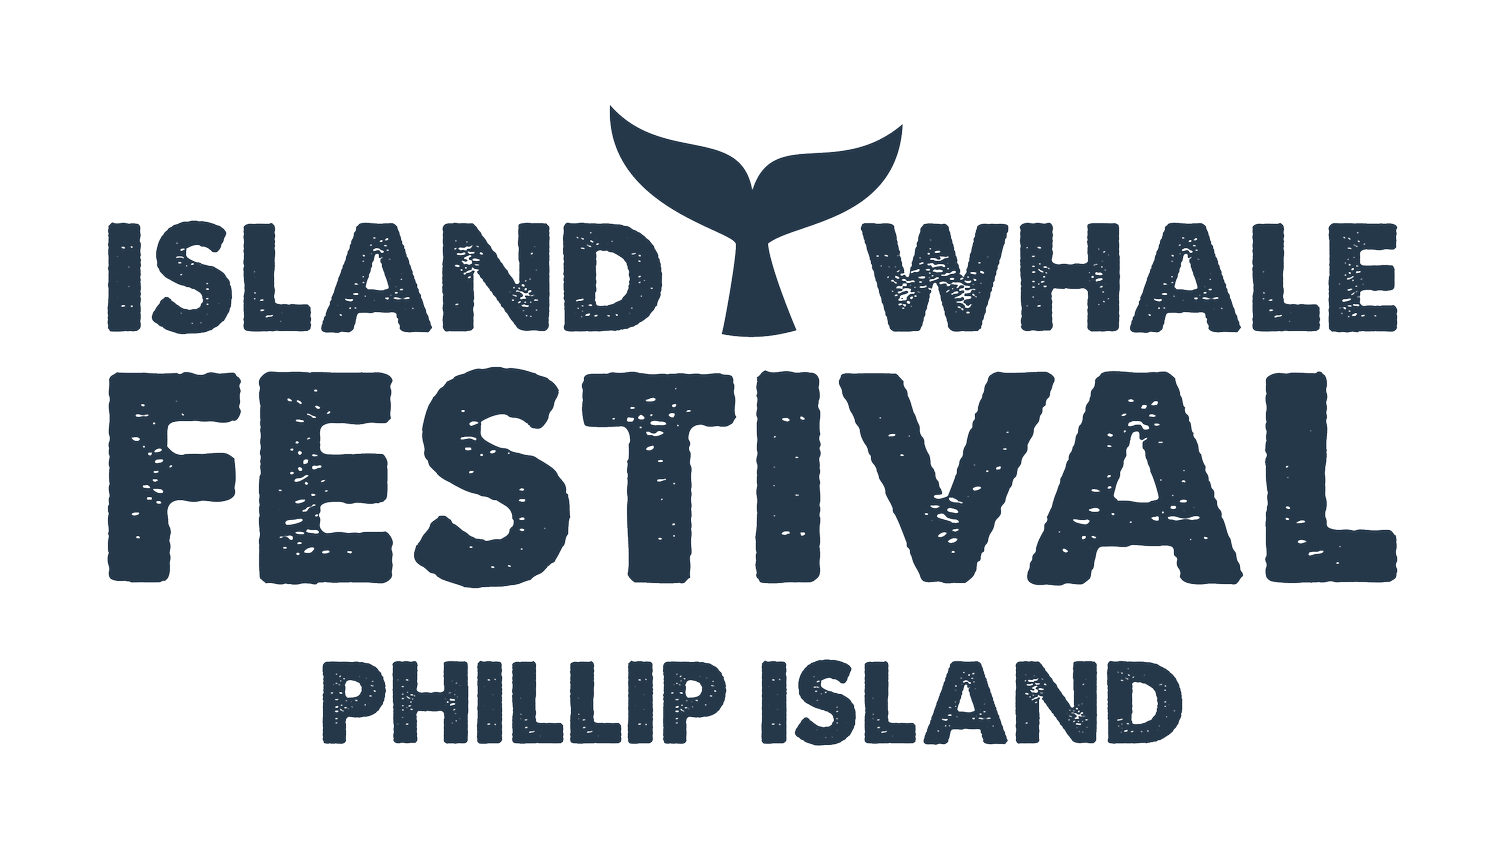 Island Whale Festival Phillip Island